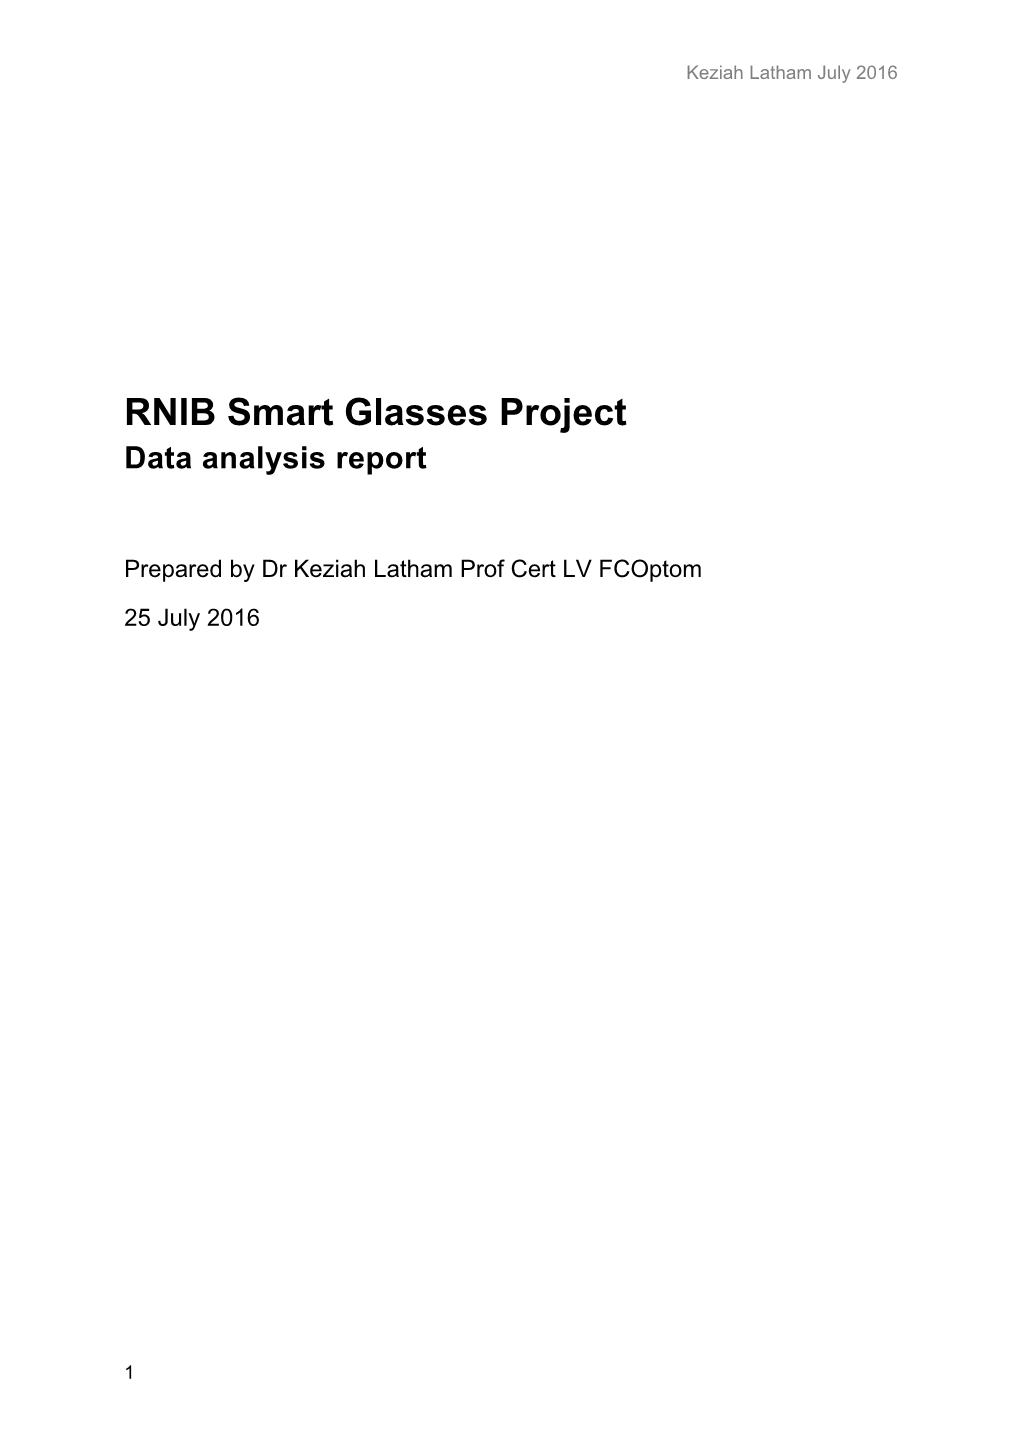 RNIB Smart Glasses Project